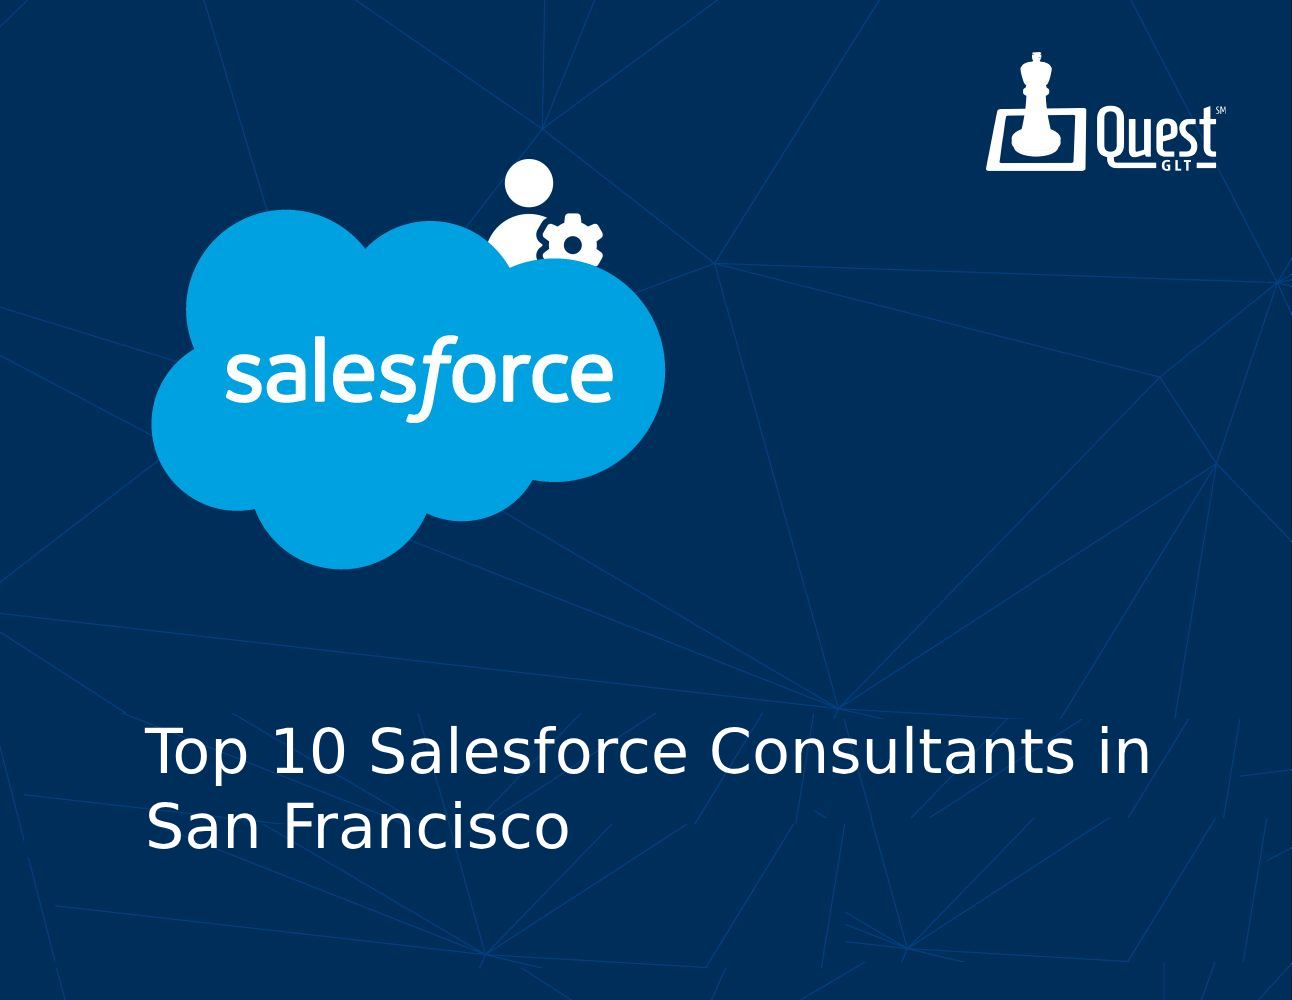 Top 10 Salesforce Consultants in San Francisco